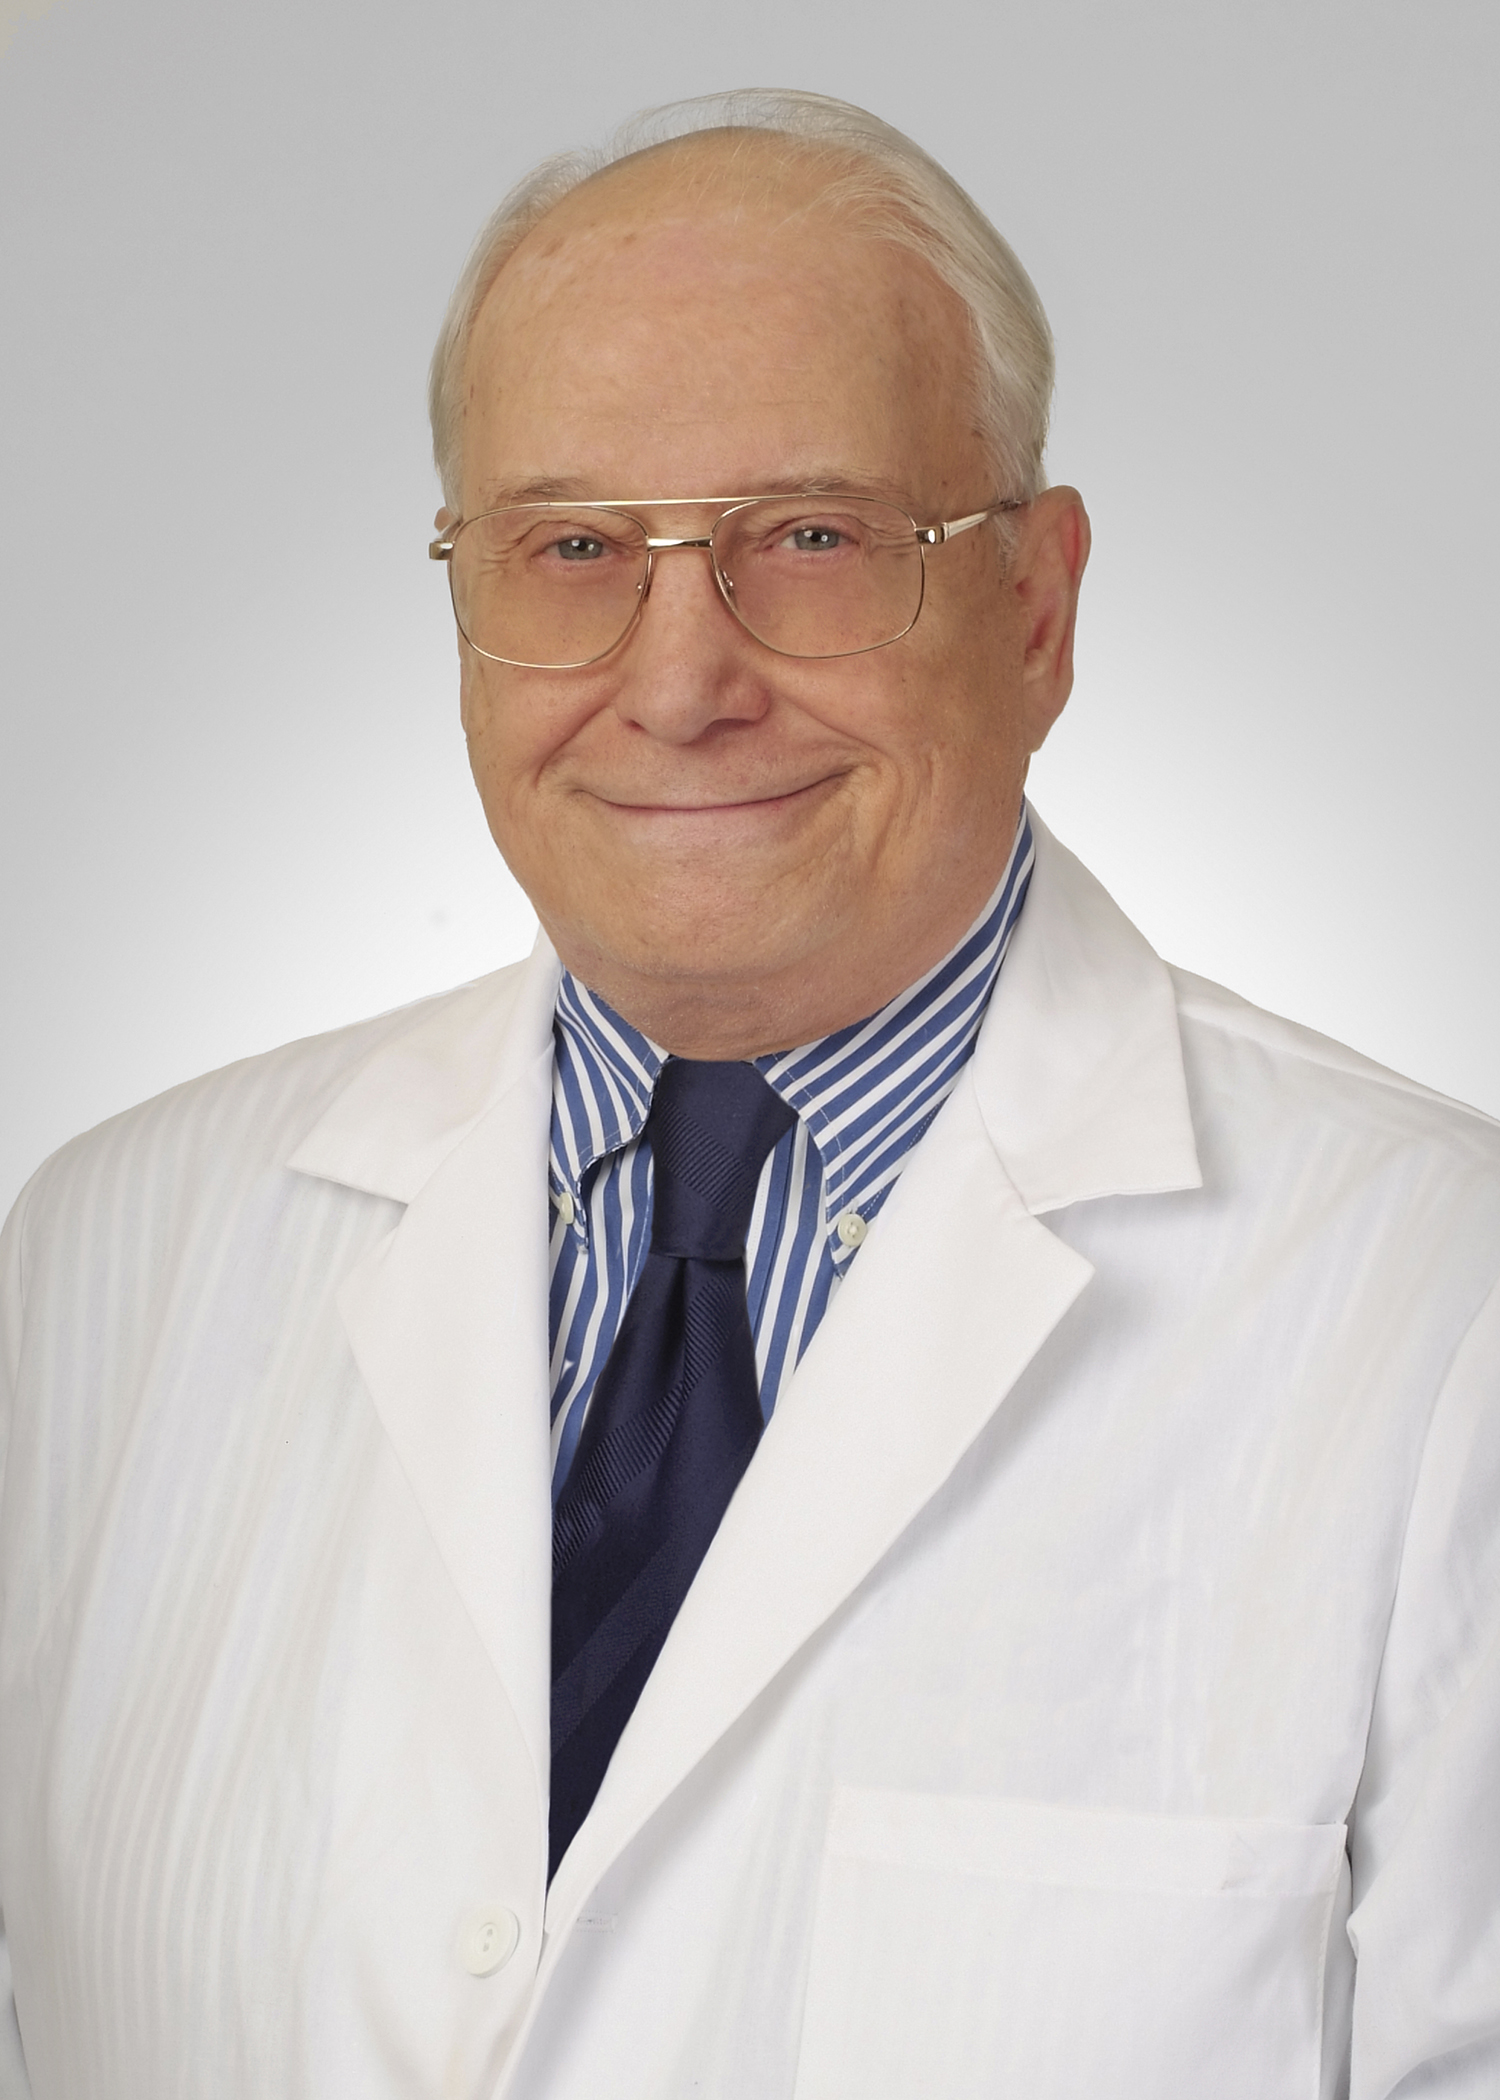 John R. Olson, MD